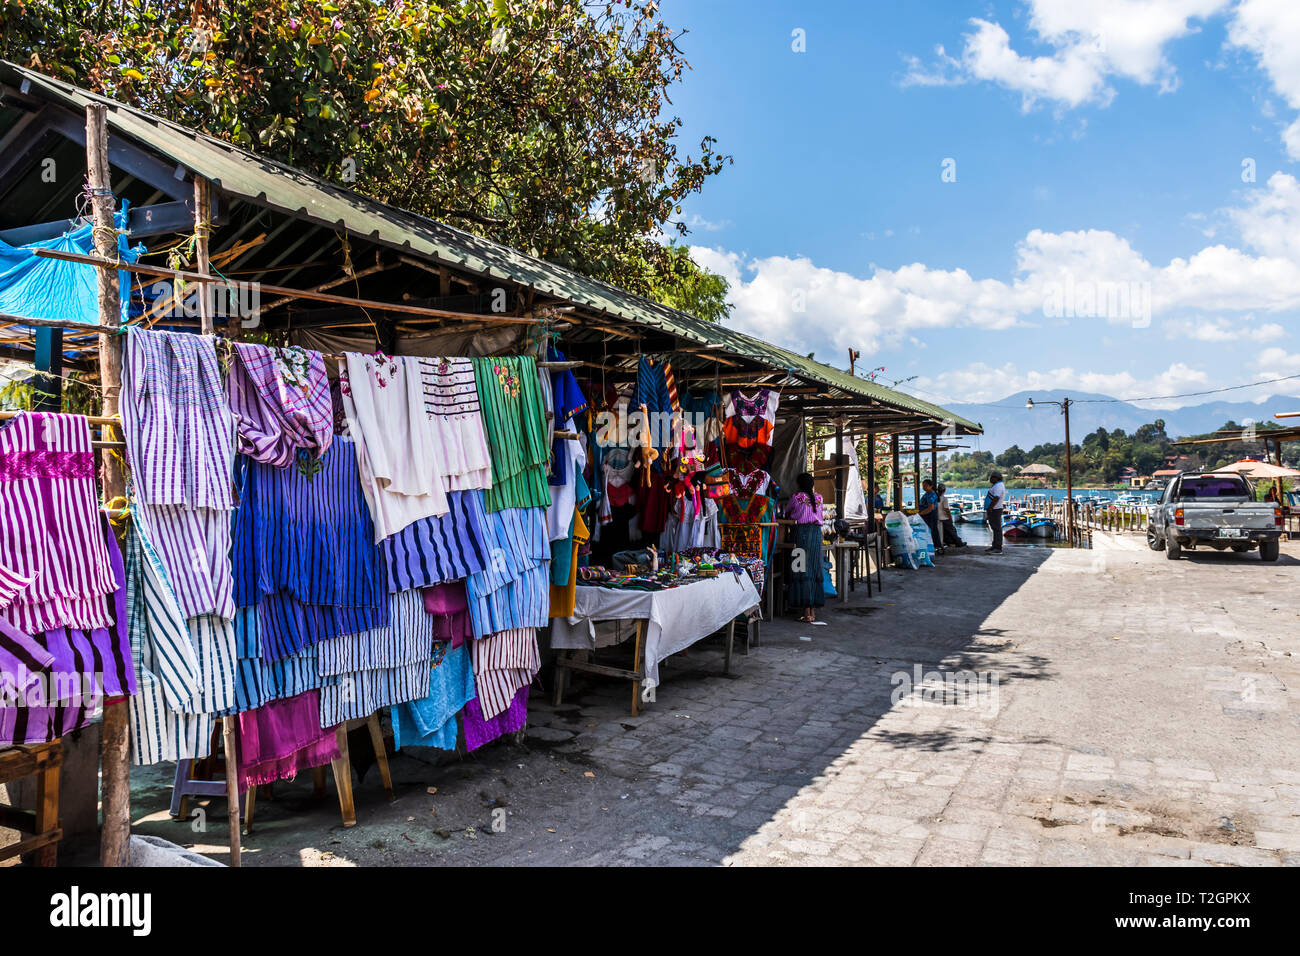 Santiago Atitlan, Lake Atitlan, Guatemala - March 8, 2019: Stall selling Mayan textiles & souvenirs in largest Mayan town on Lake Atitlan in Guatemala Stock Photo